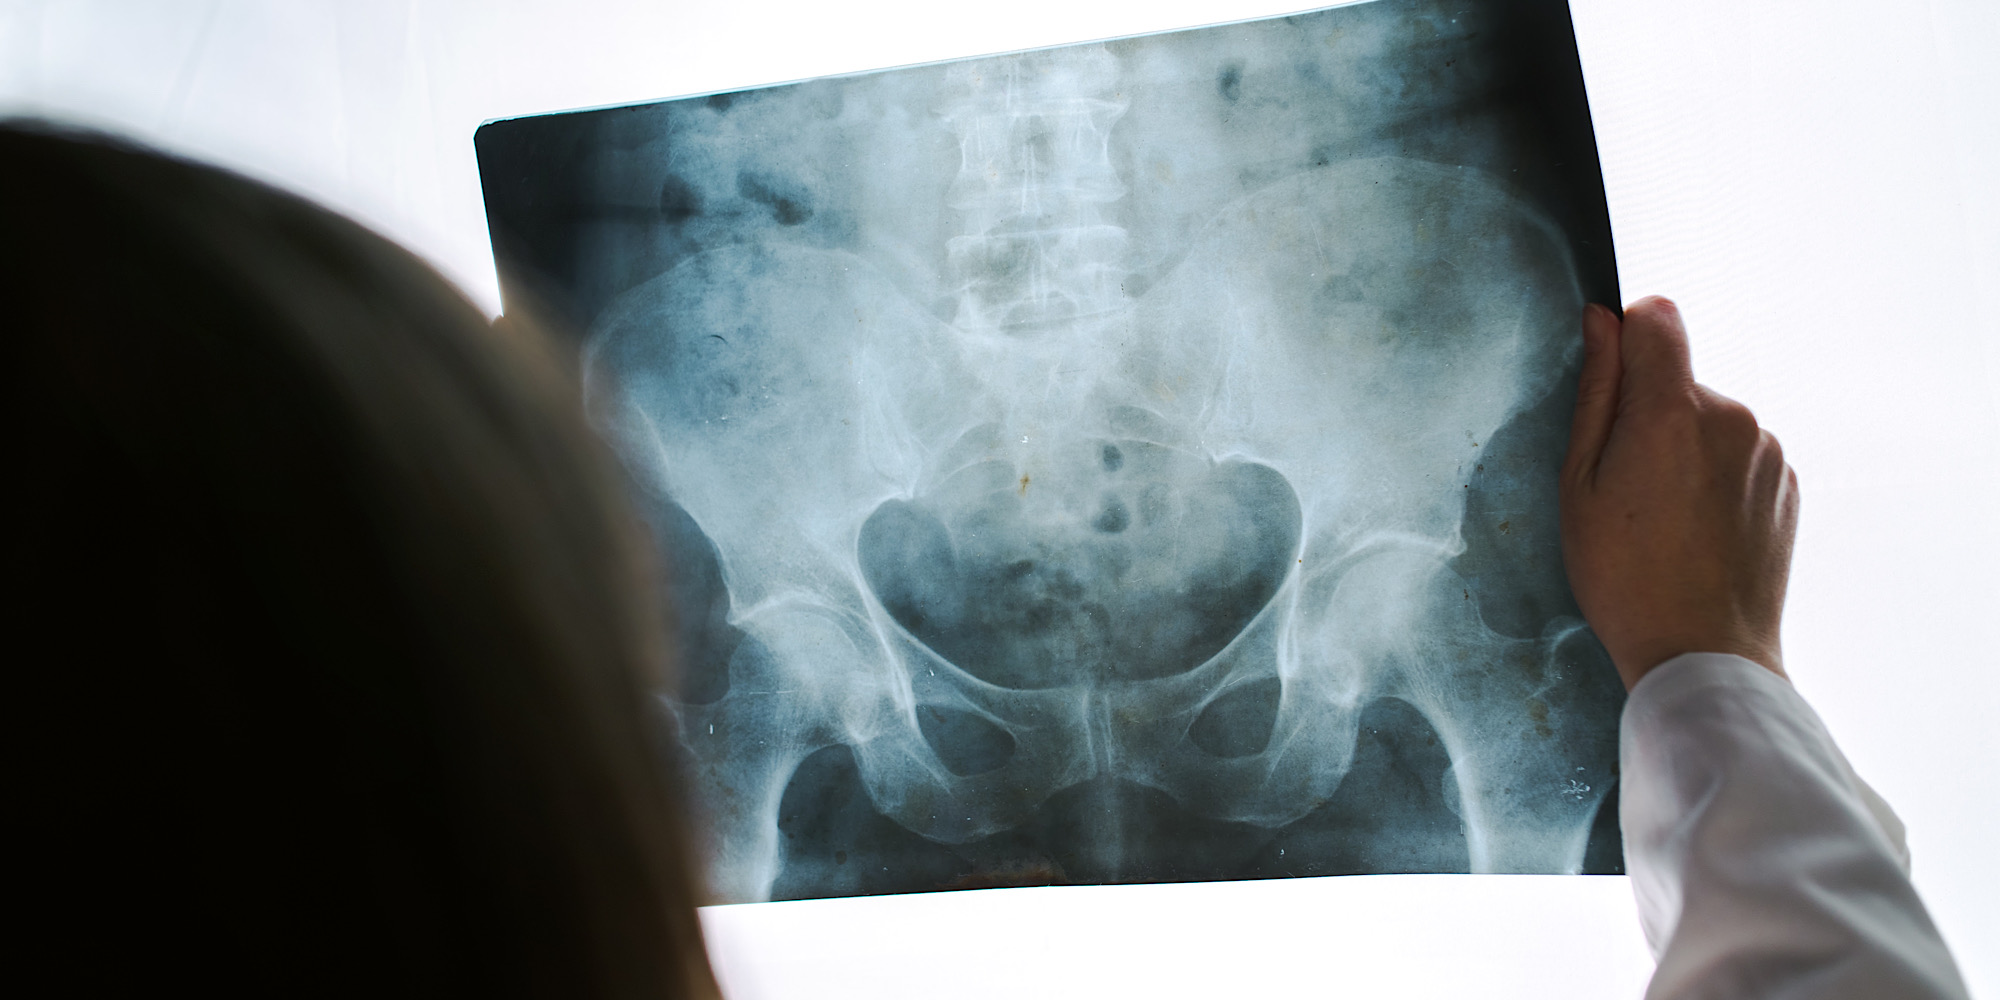 Female doctor examining pelvis x-ray in hospital office